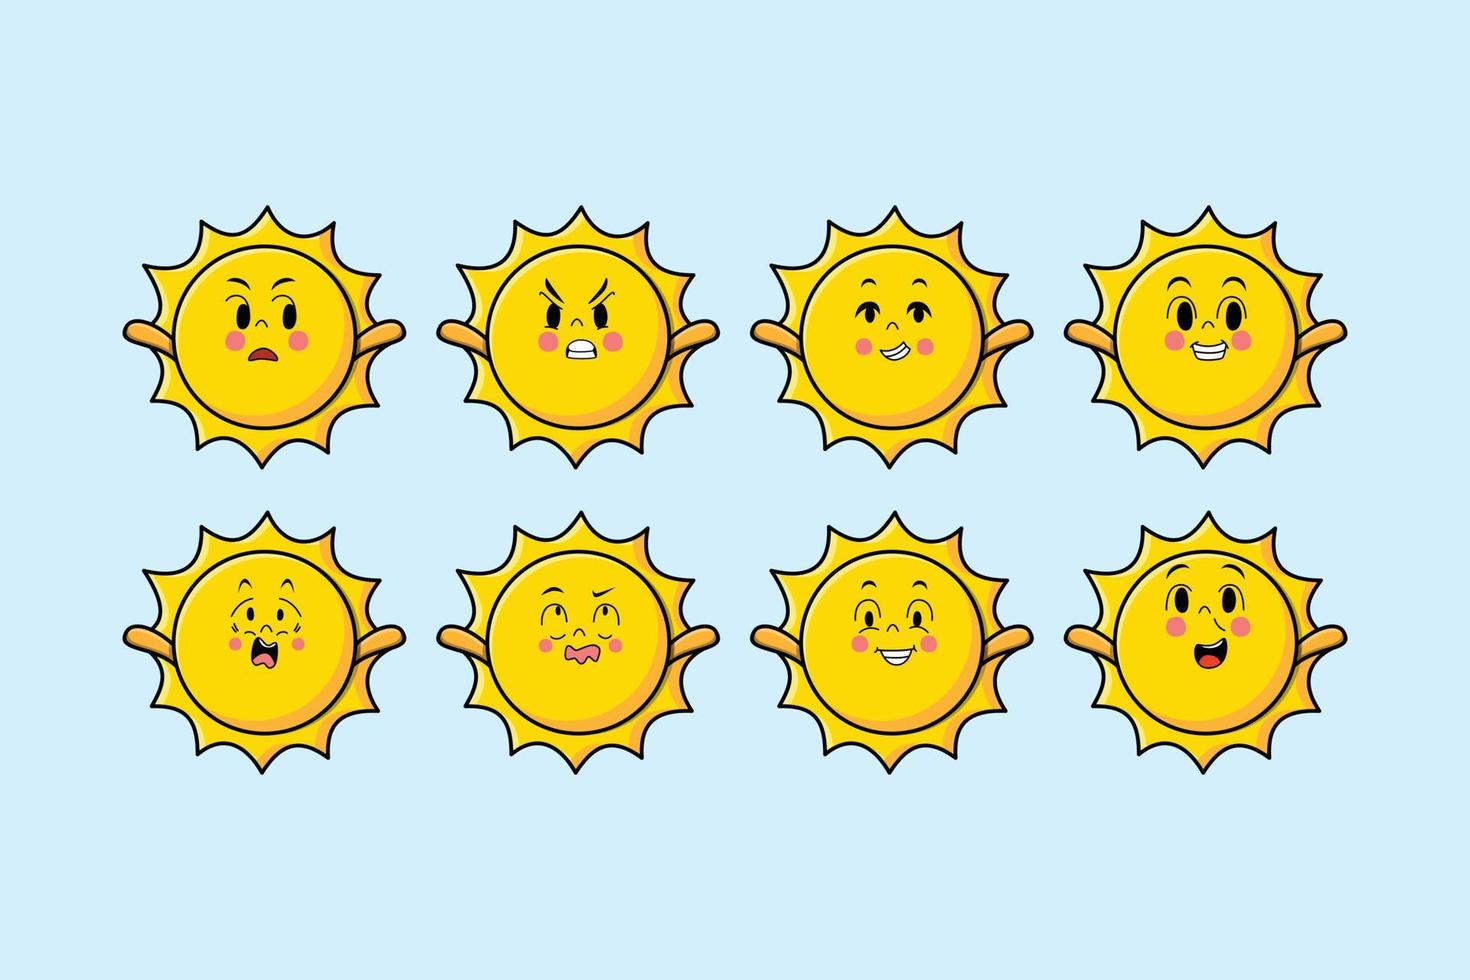 tecknad kawaii sol tecknad med olika uttryck vektor